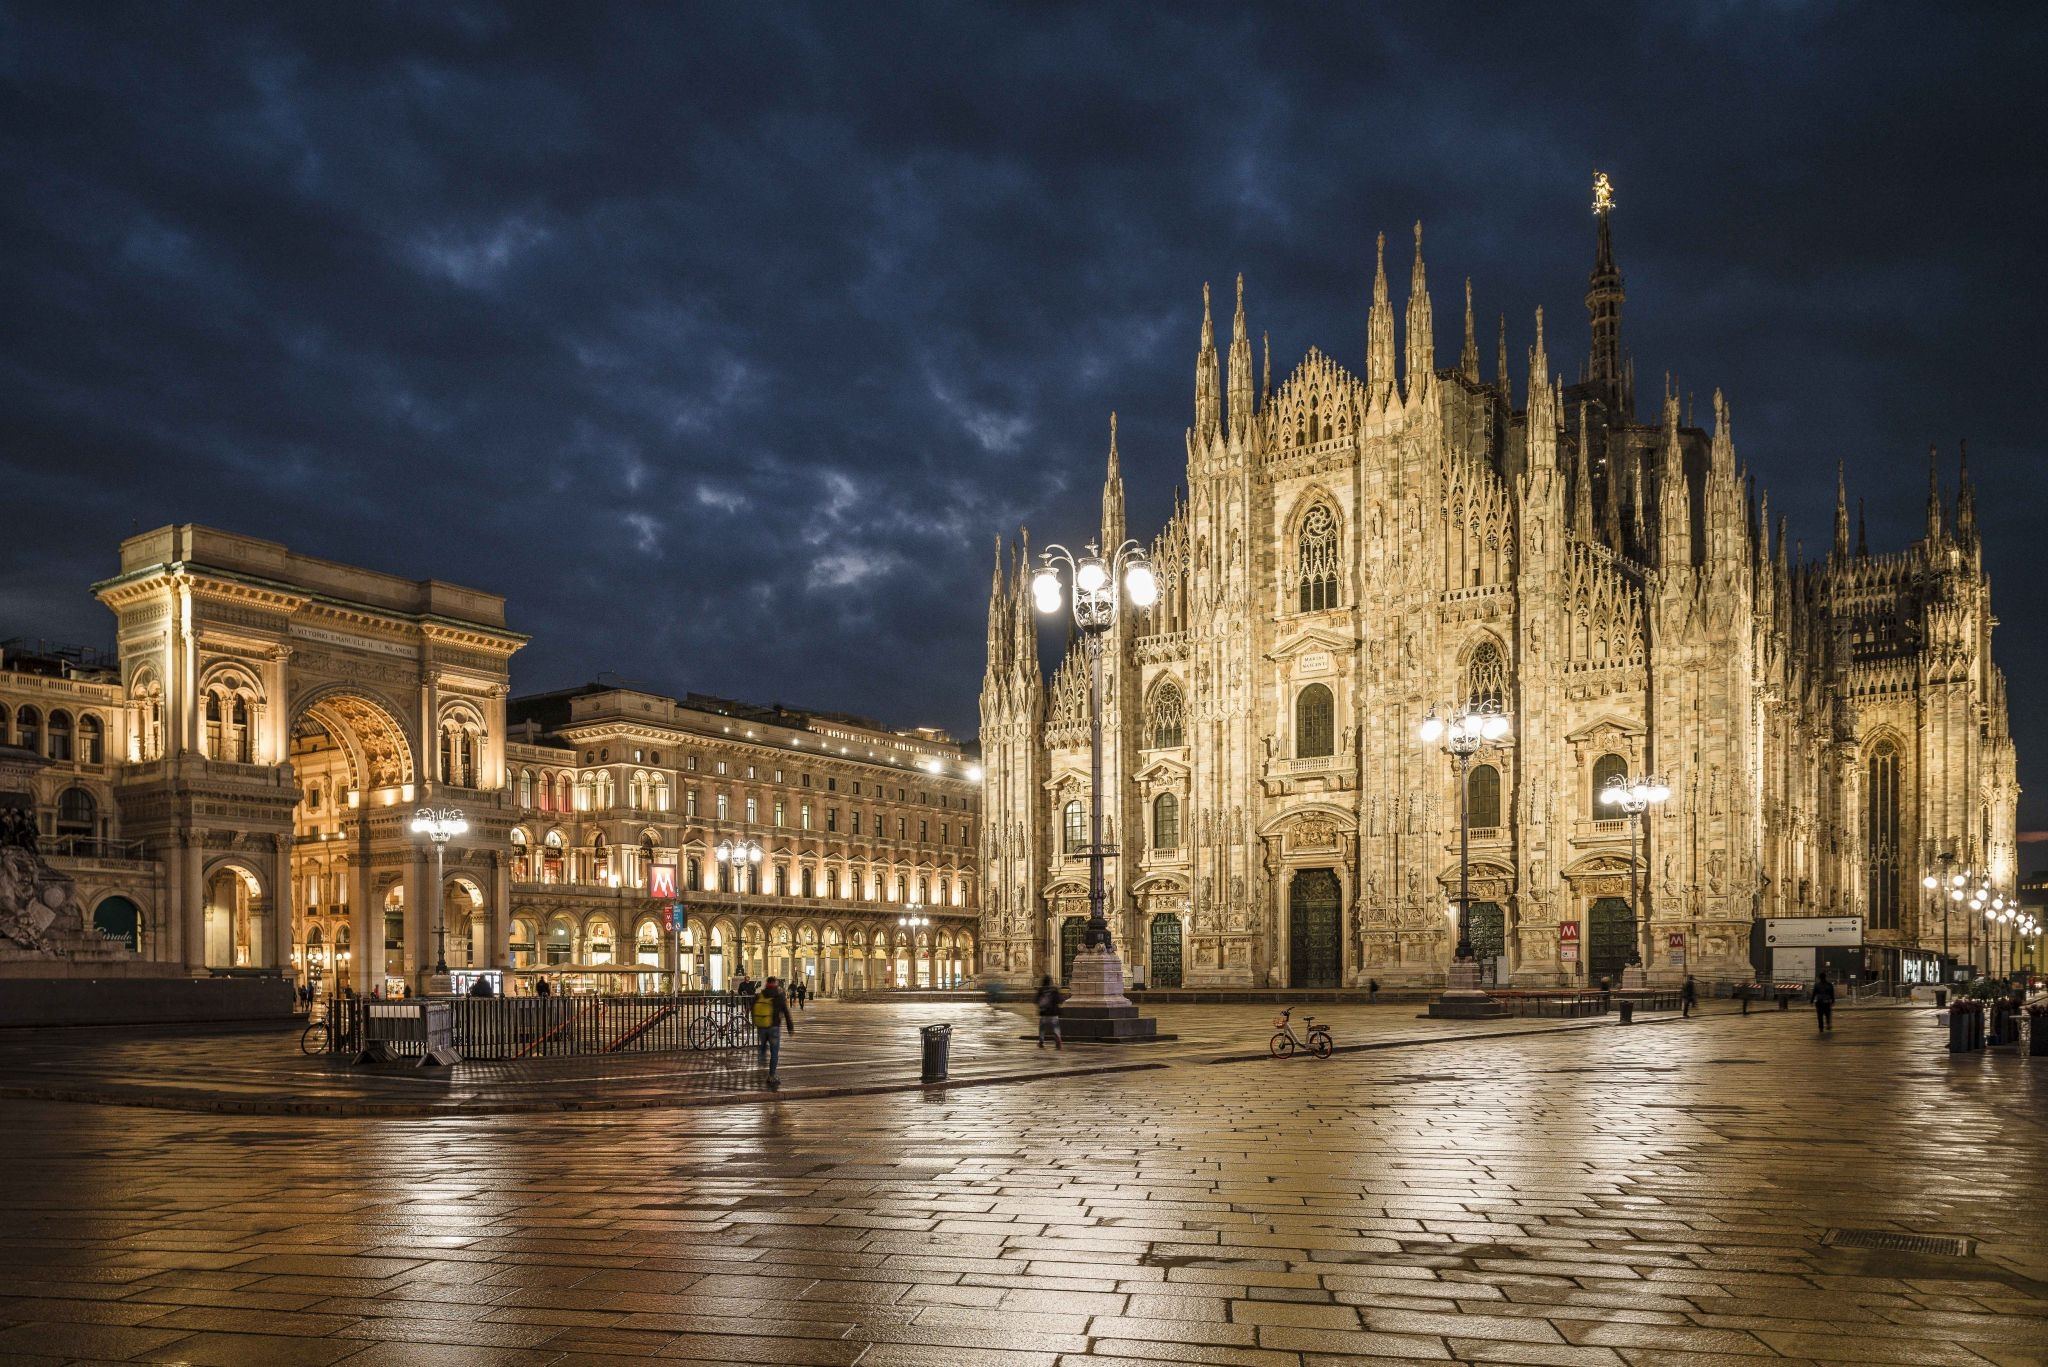 Duomo di Milano, Milan, Italy - Yoors